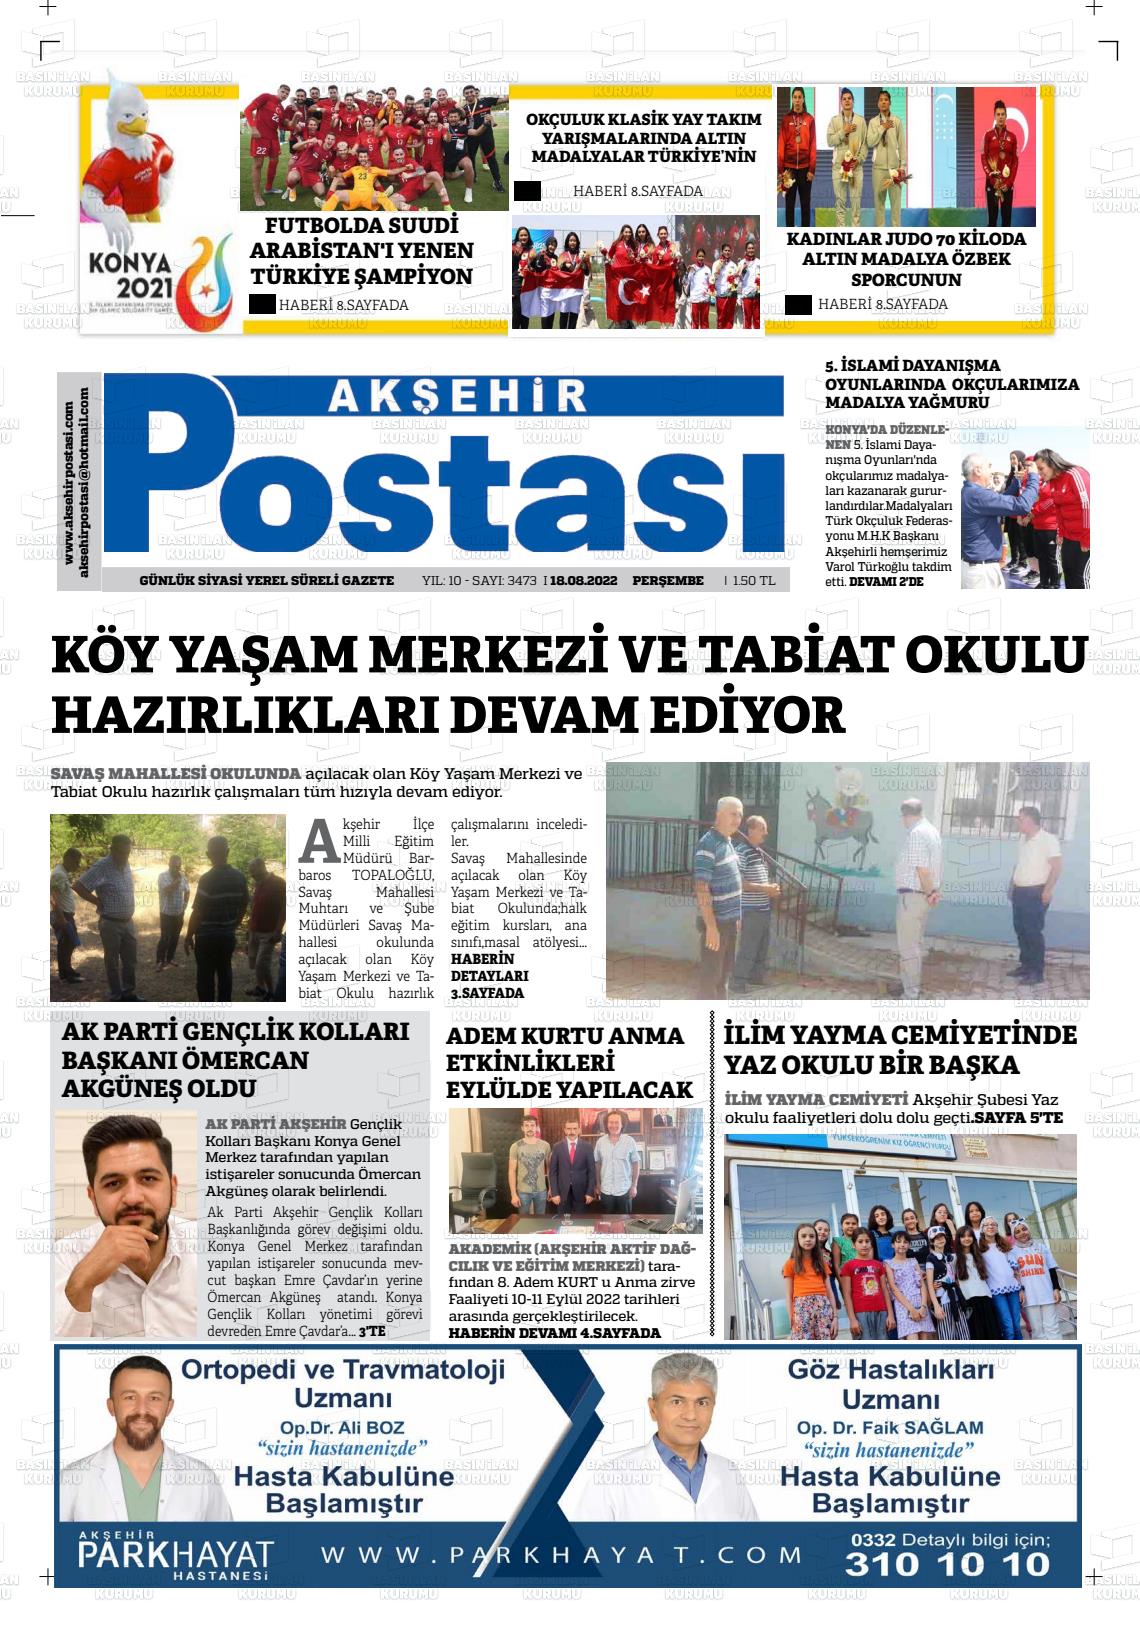 18 Ağustos 2022 Akşehir Postasi Gazete Manşeti